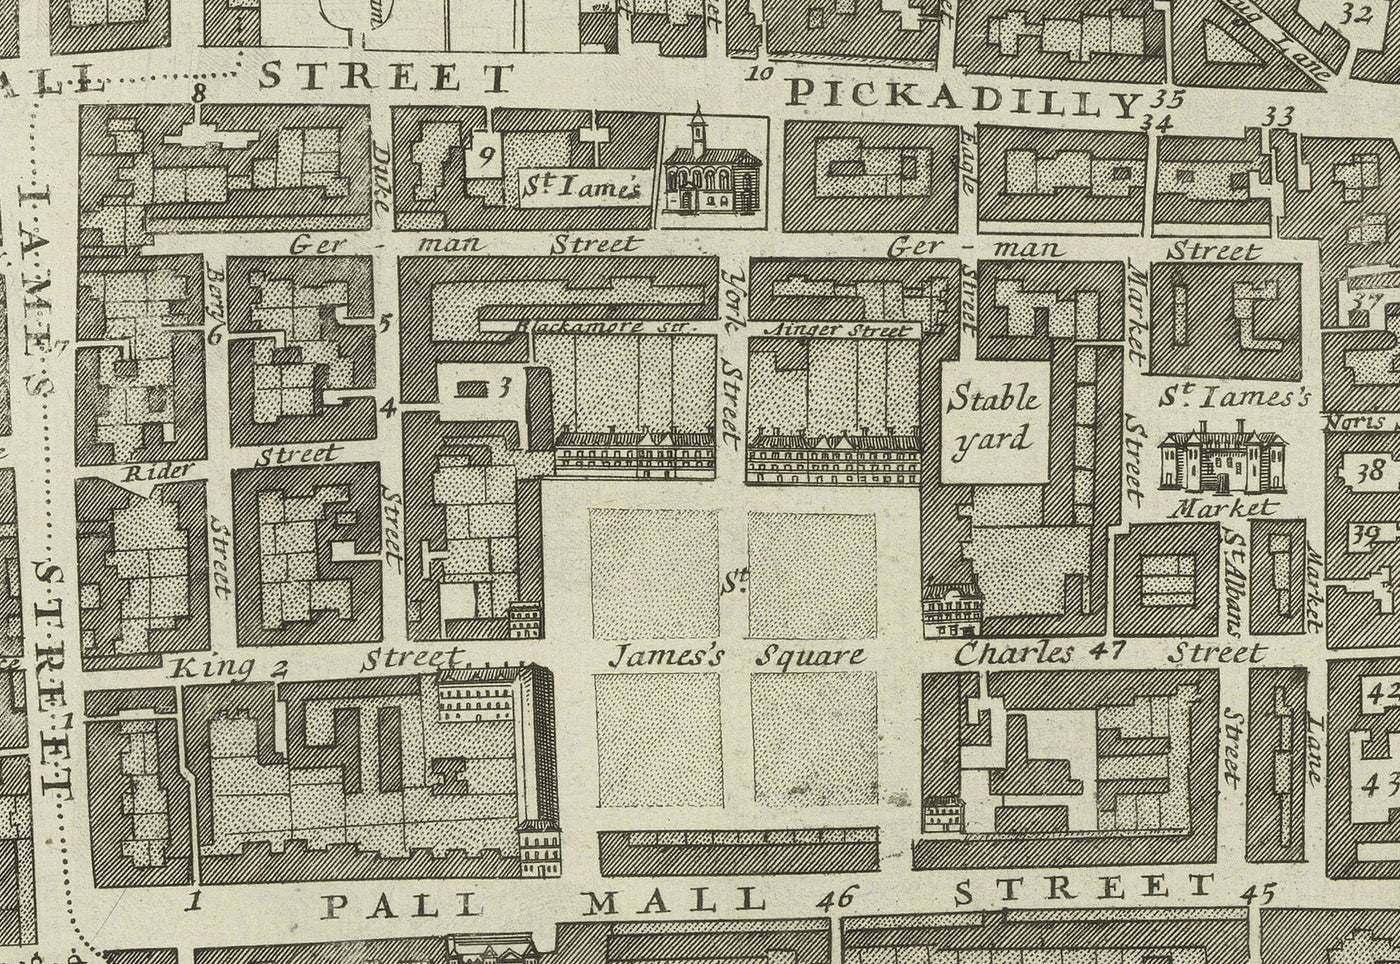 Mapa antiguo de la parroquia de St James, 1720 por Strype y Stow - Londres, Piccadilly, St James's Square, Pall Mall, Westminster